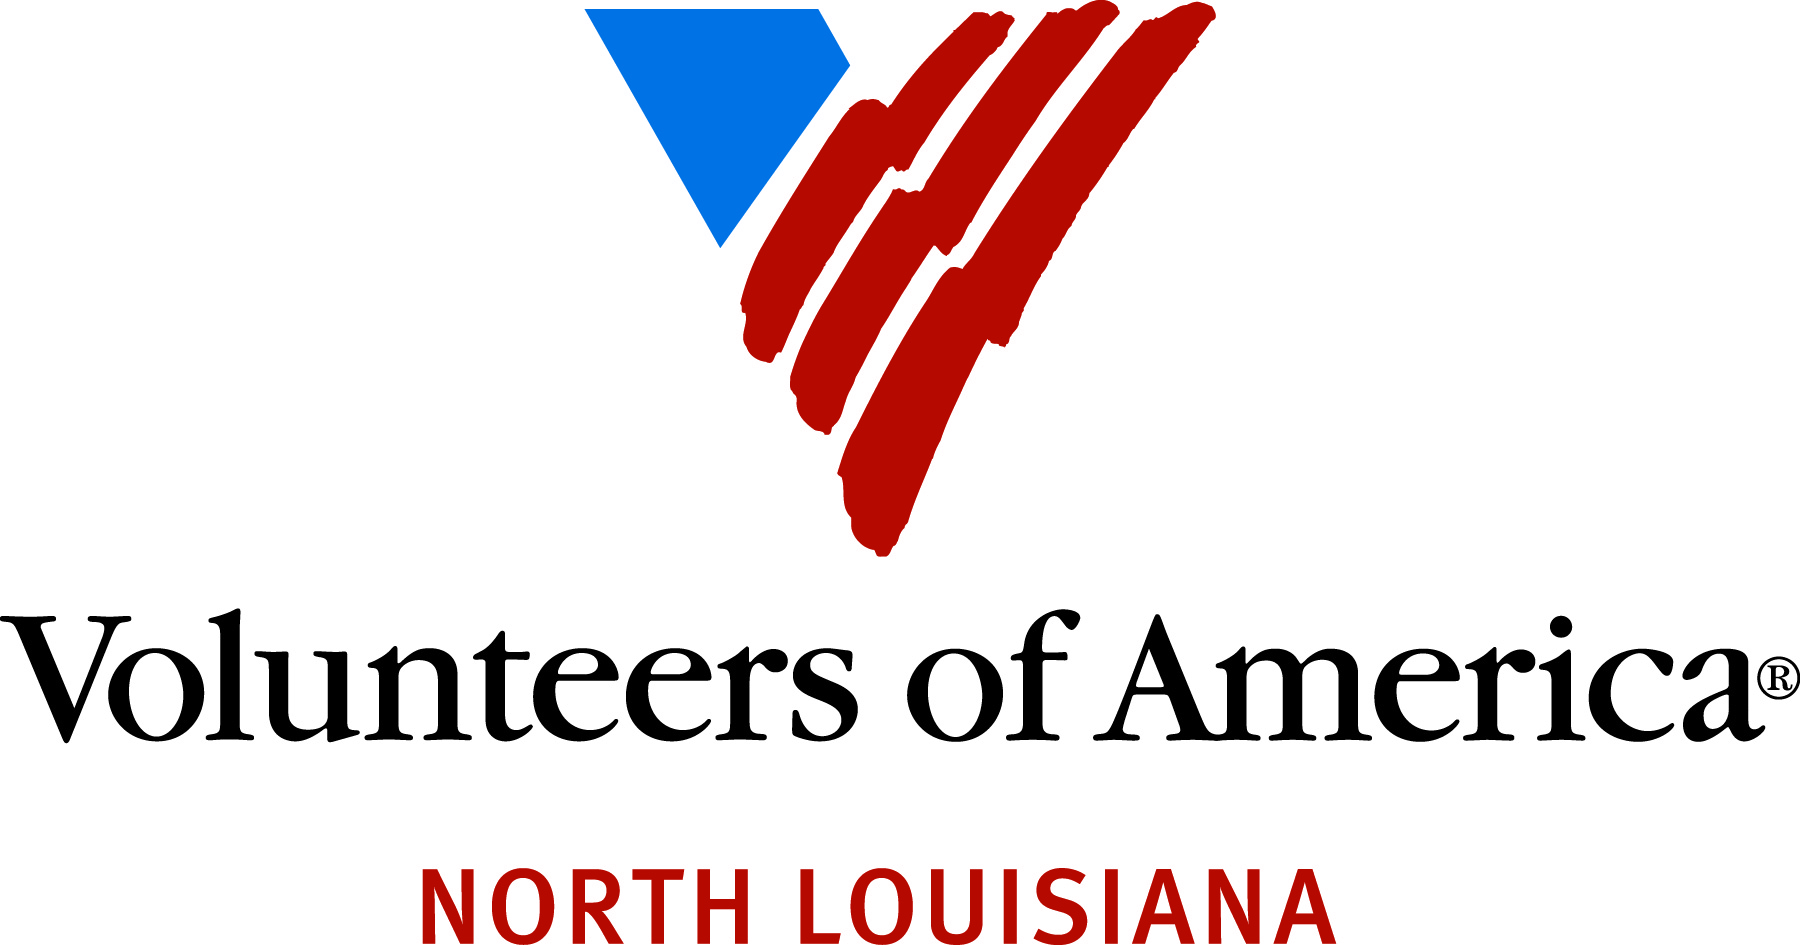 Volunteers of America North Louisiana